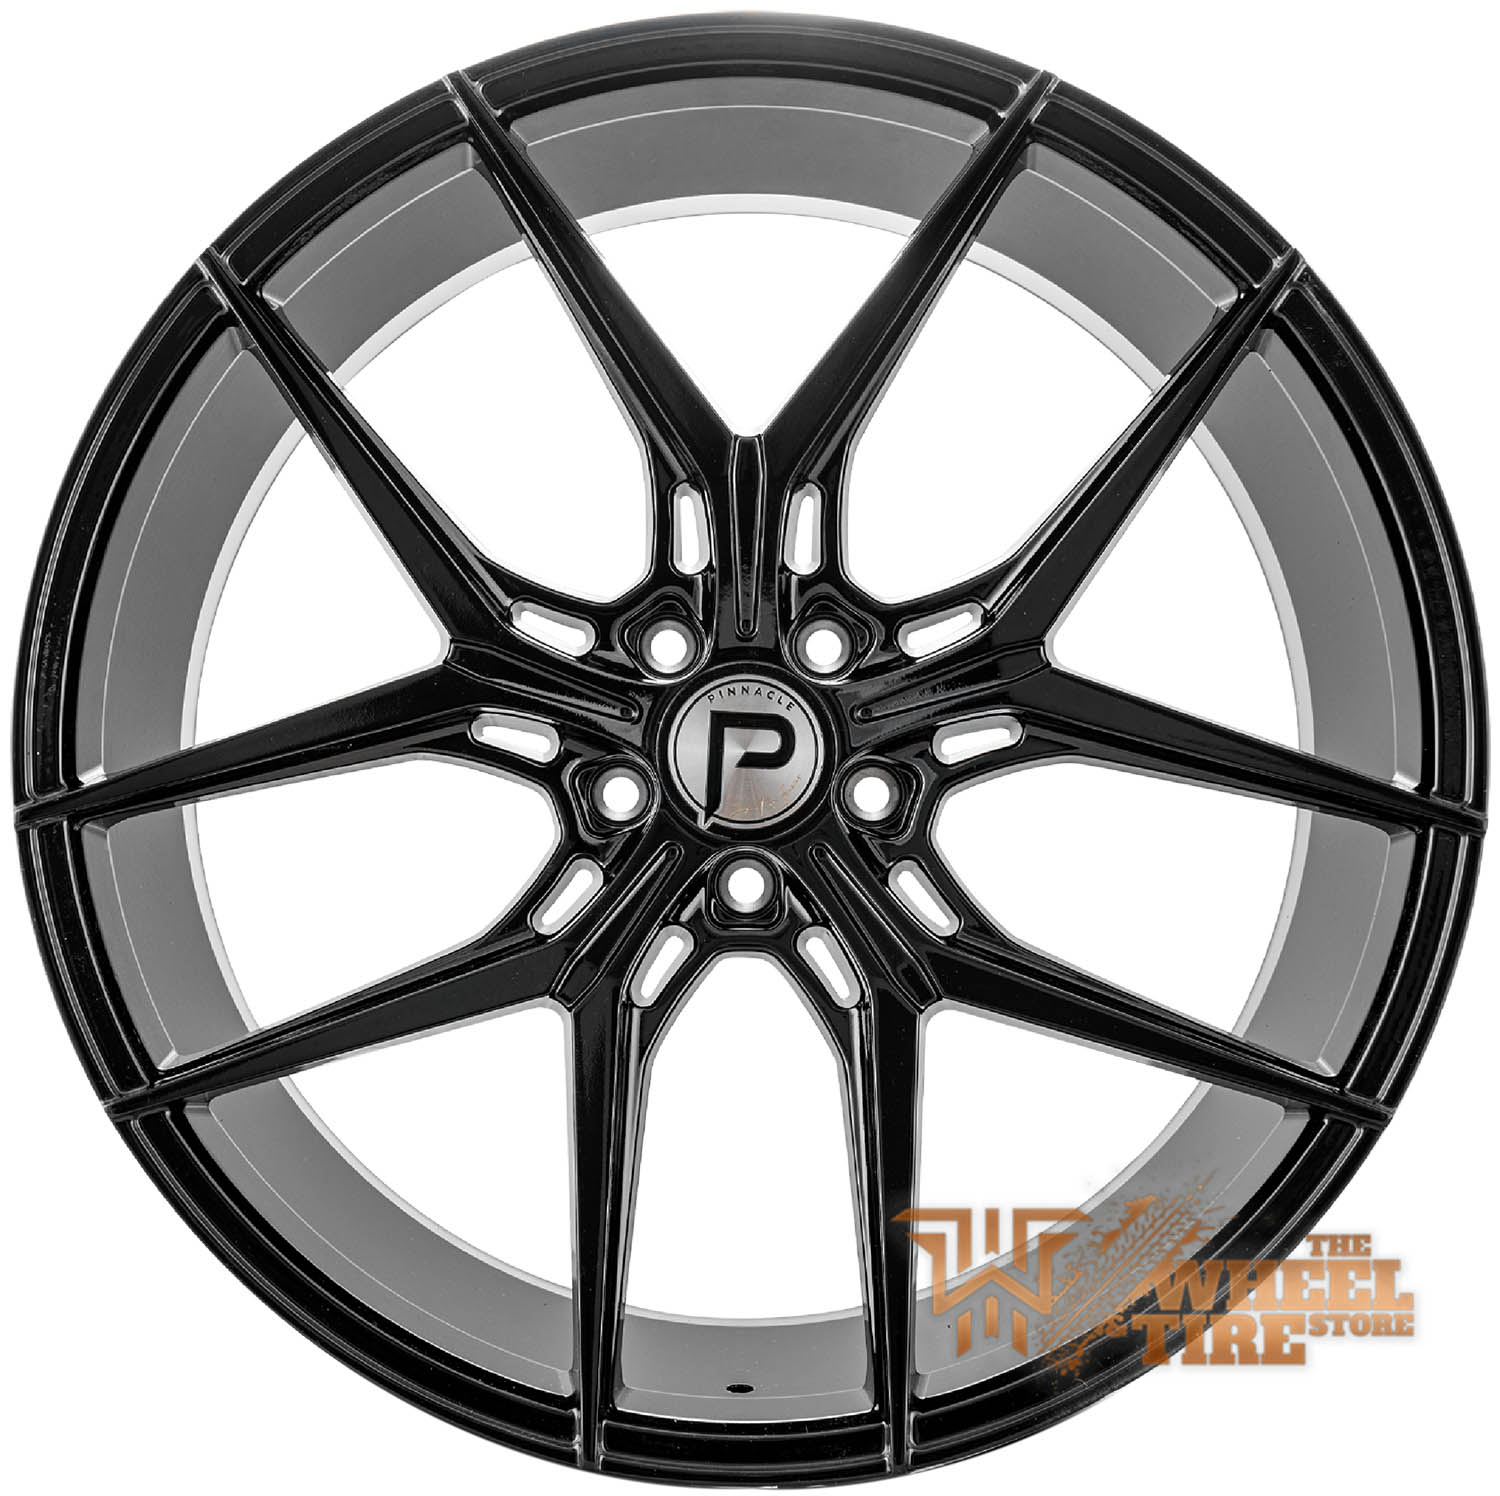 Pinnacle P204 'Splendent' Wheel in Gloss Black (Set of 4)